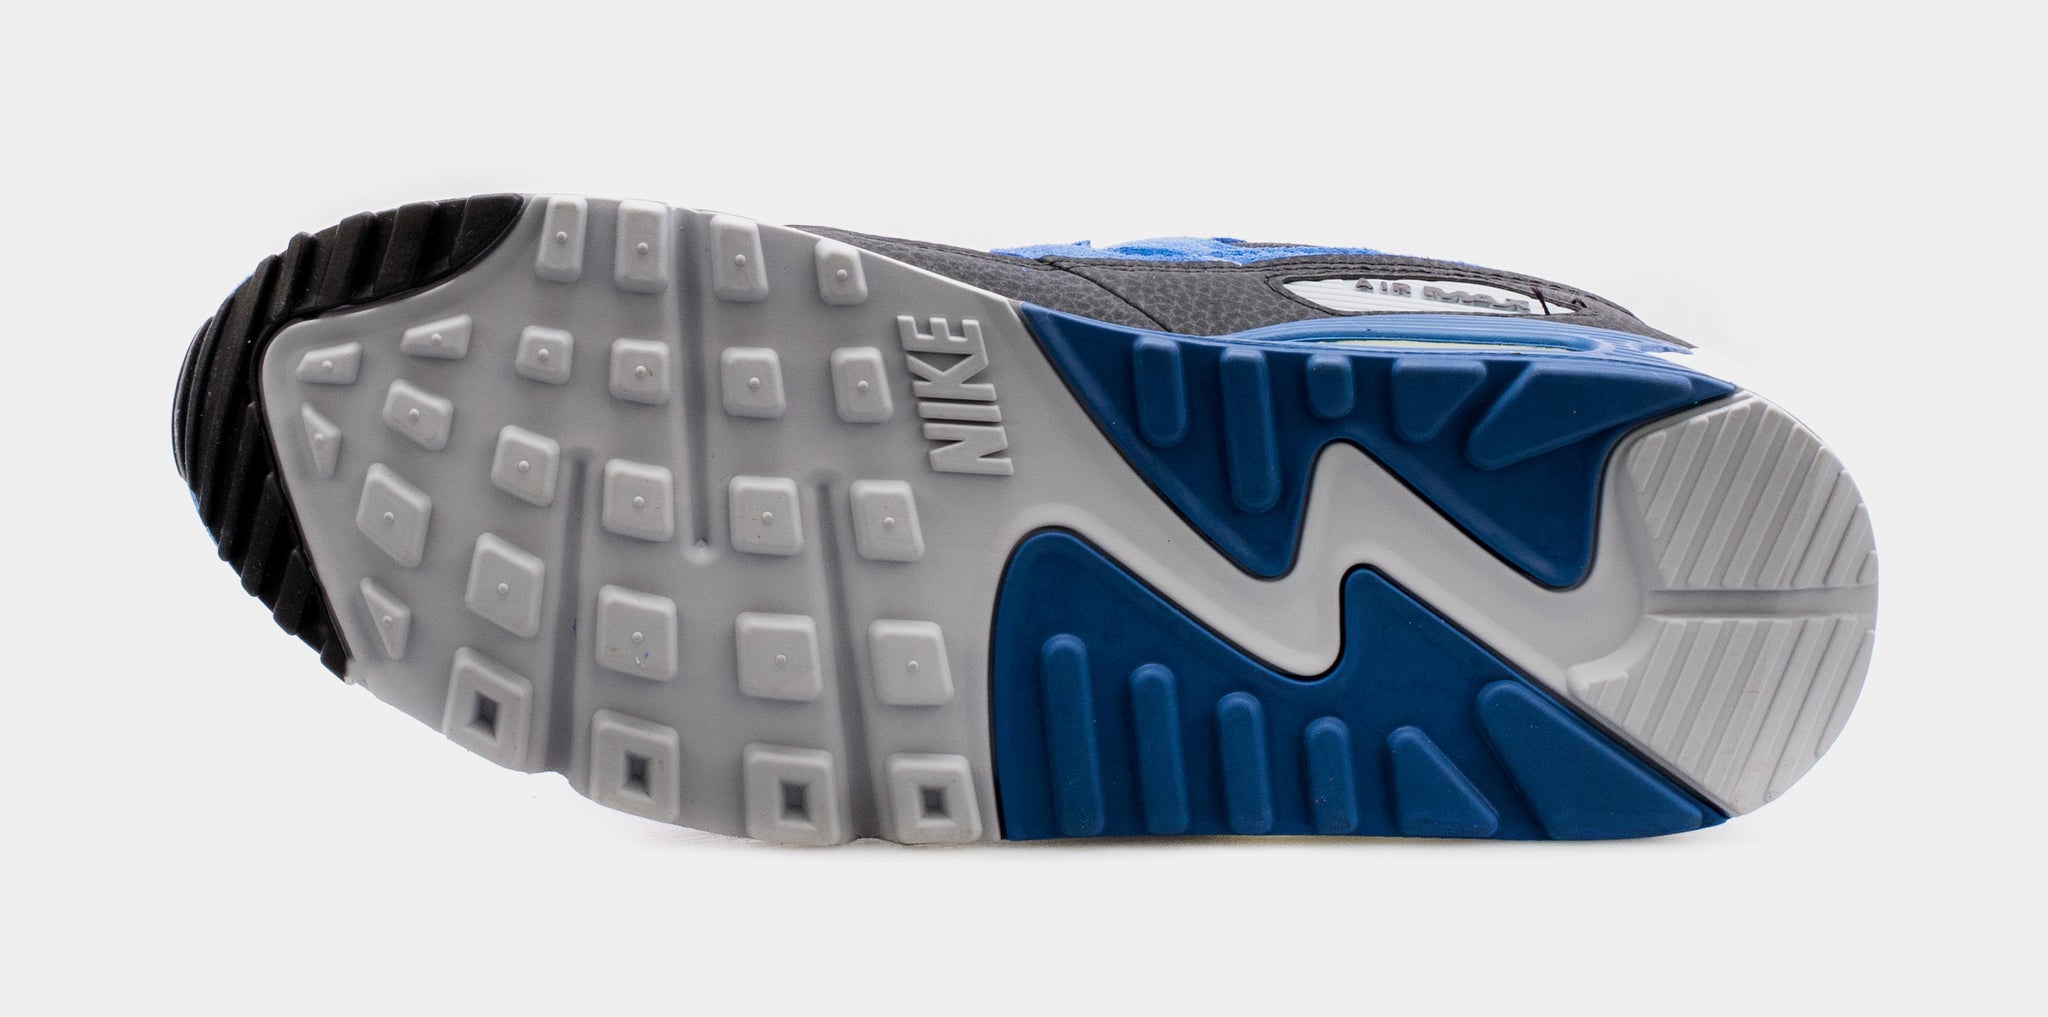 Nike Men's Air Max Supreme 3 Running Shoes (8.5 D(M